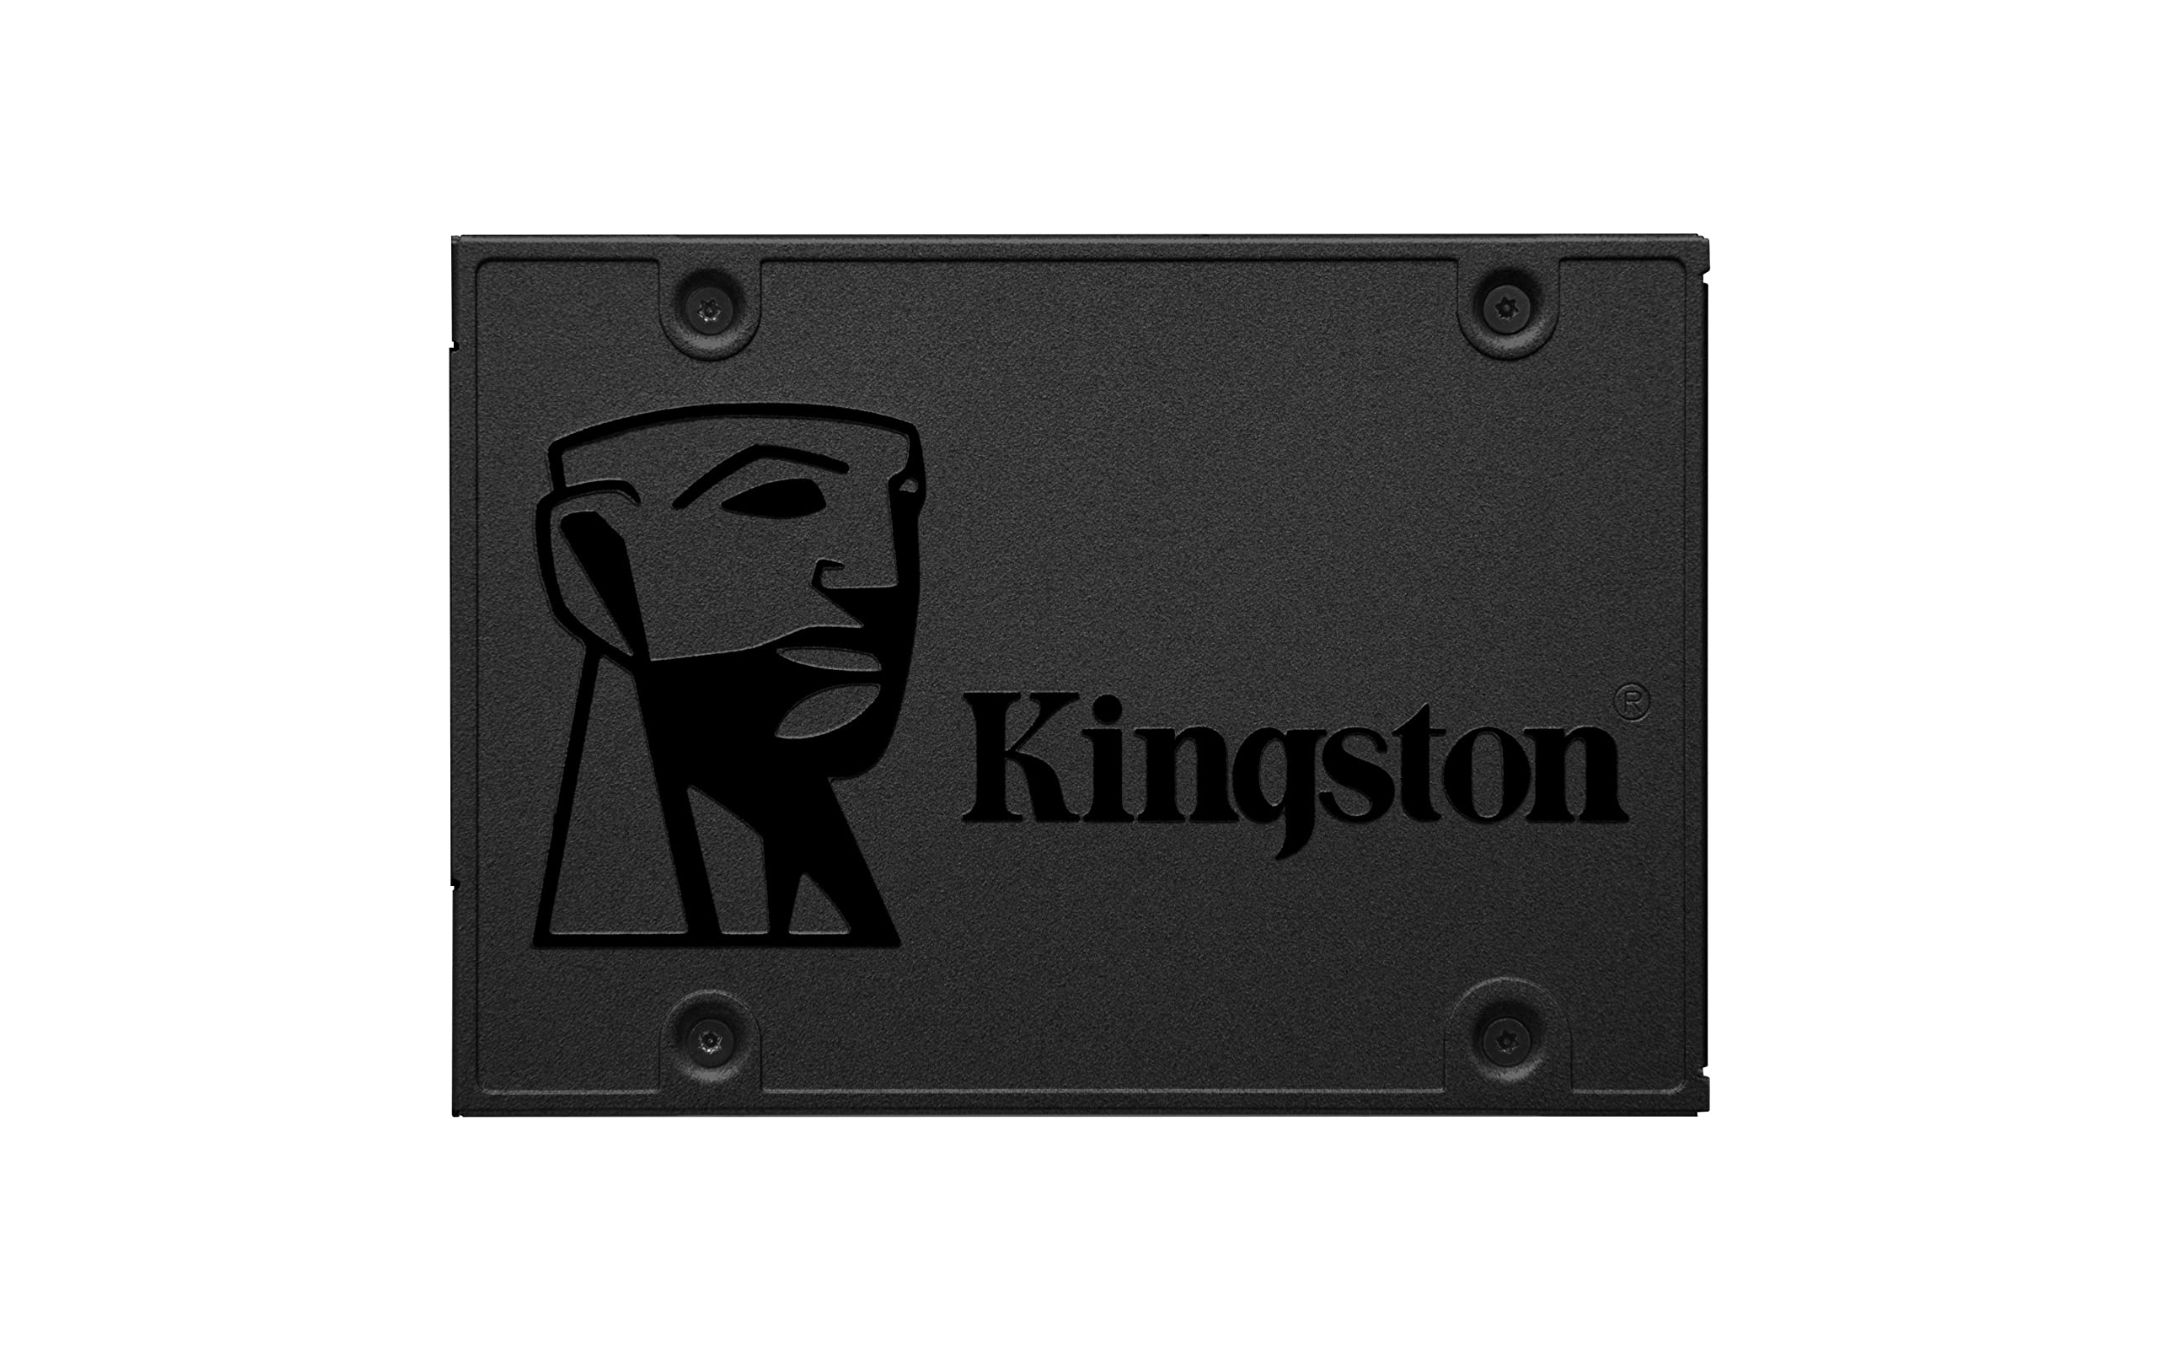 SSD Kingston 240 GB in SUPER OFFERTA